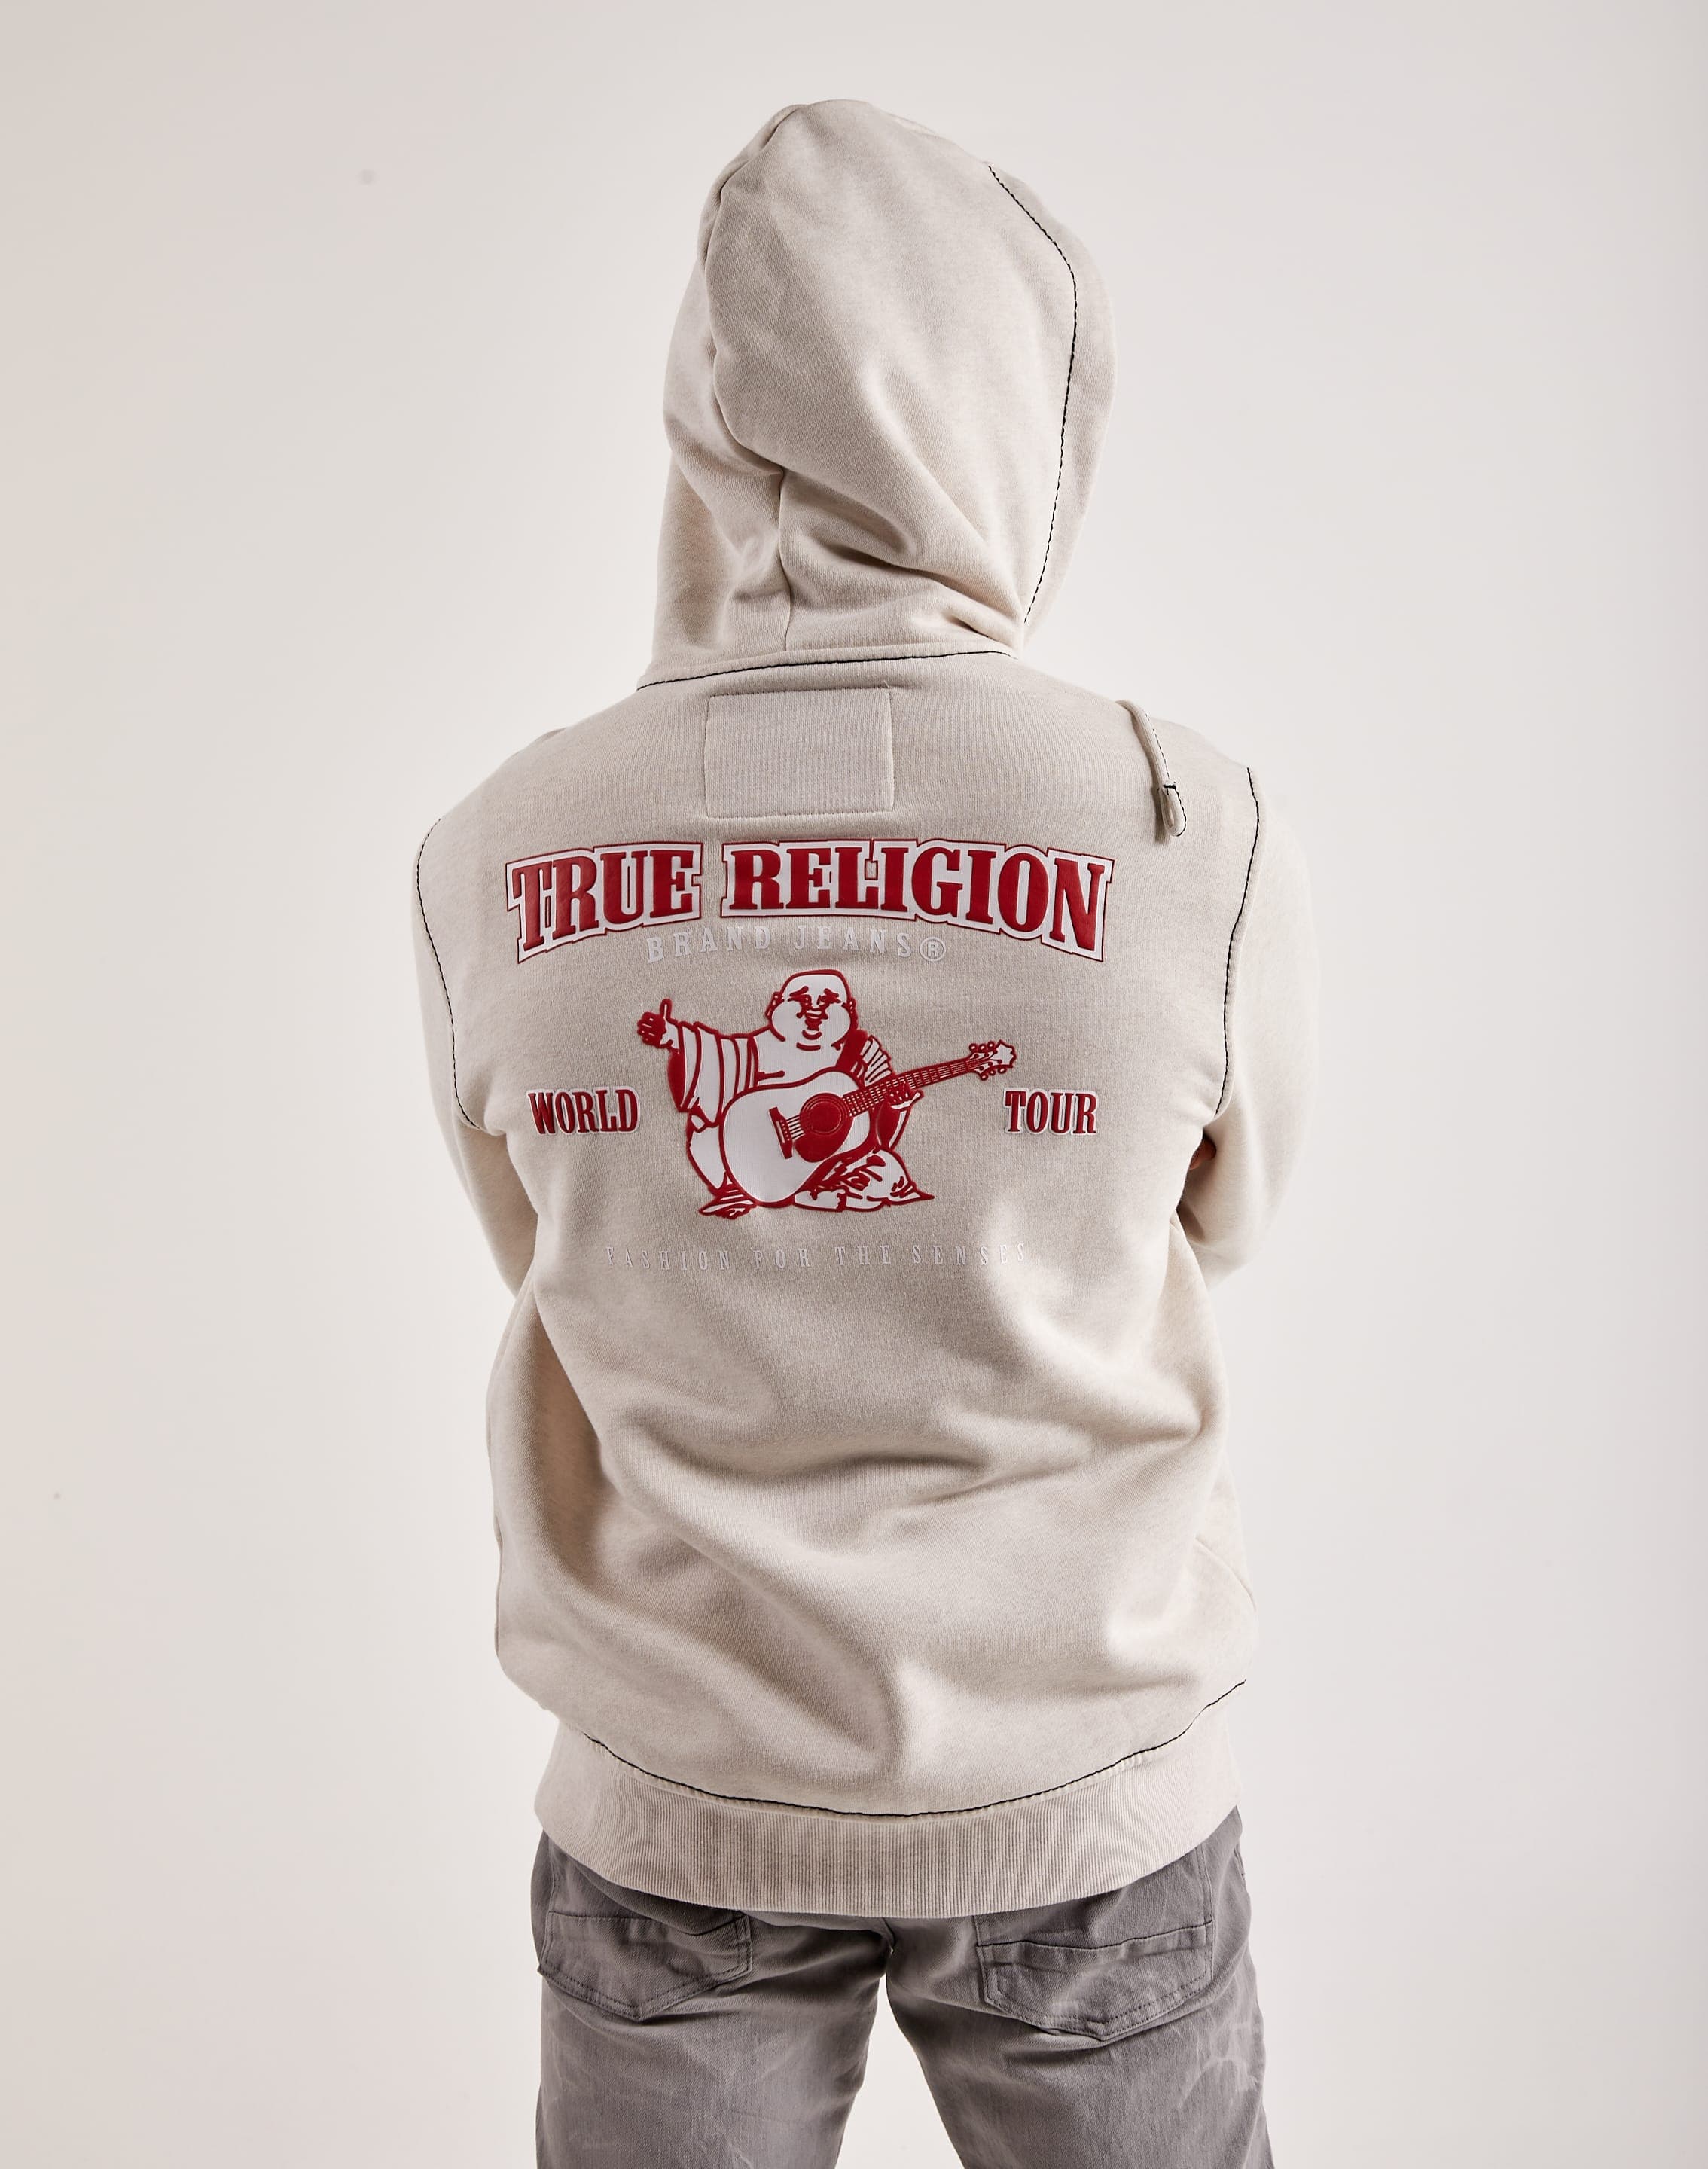 Aggregate more than 98 true religion denim hoodie